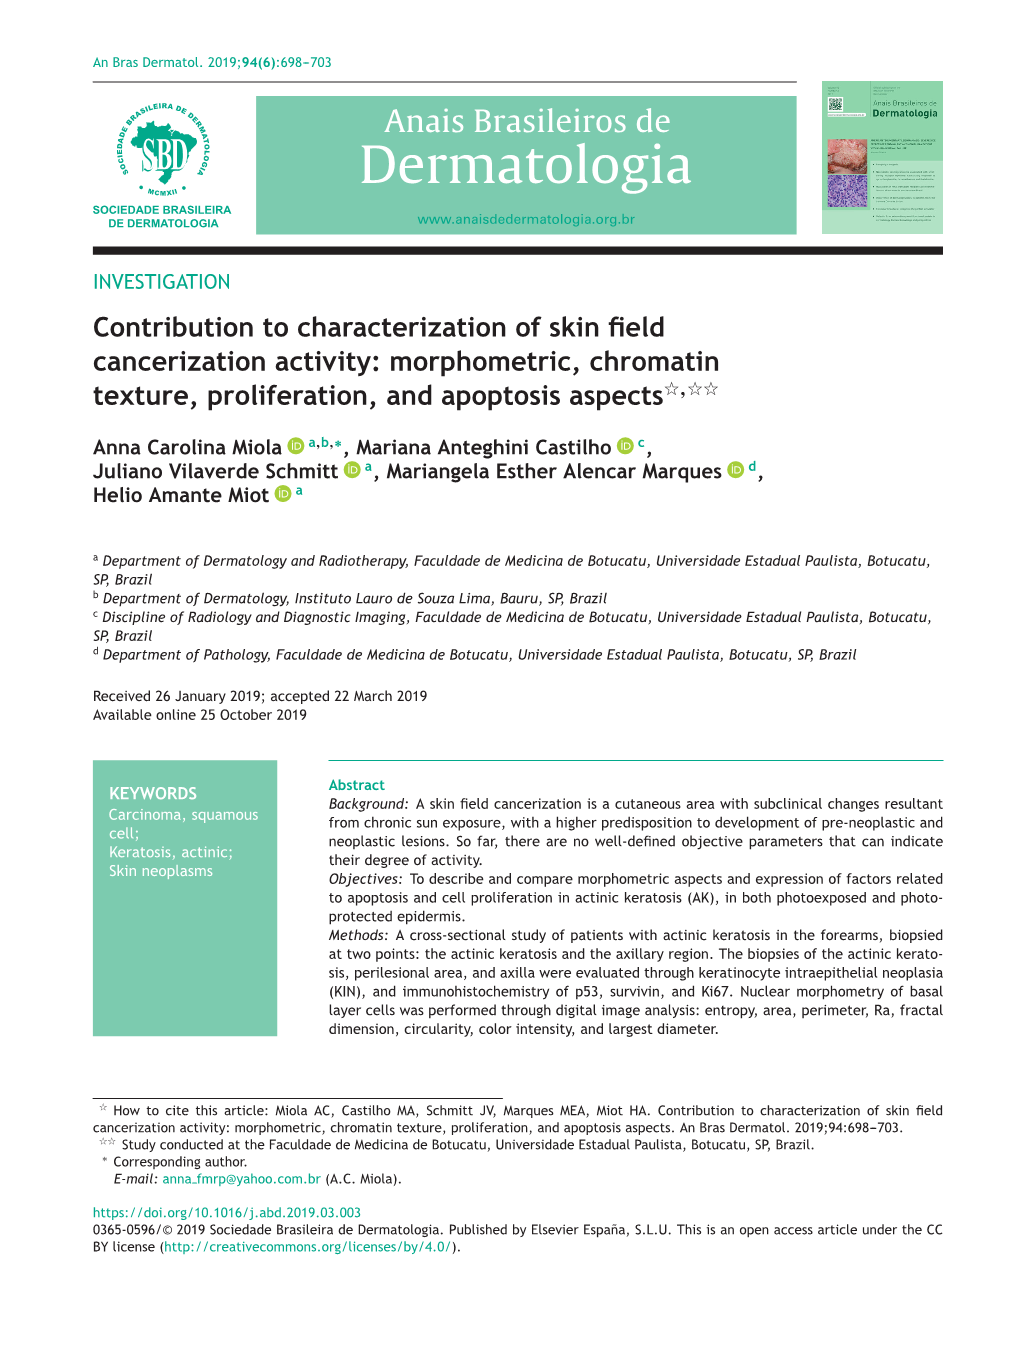 Contribution to Characterization of Skin Field Cancerization Activity